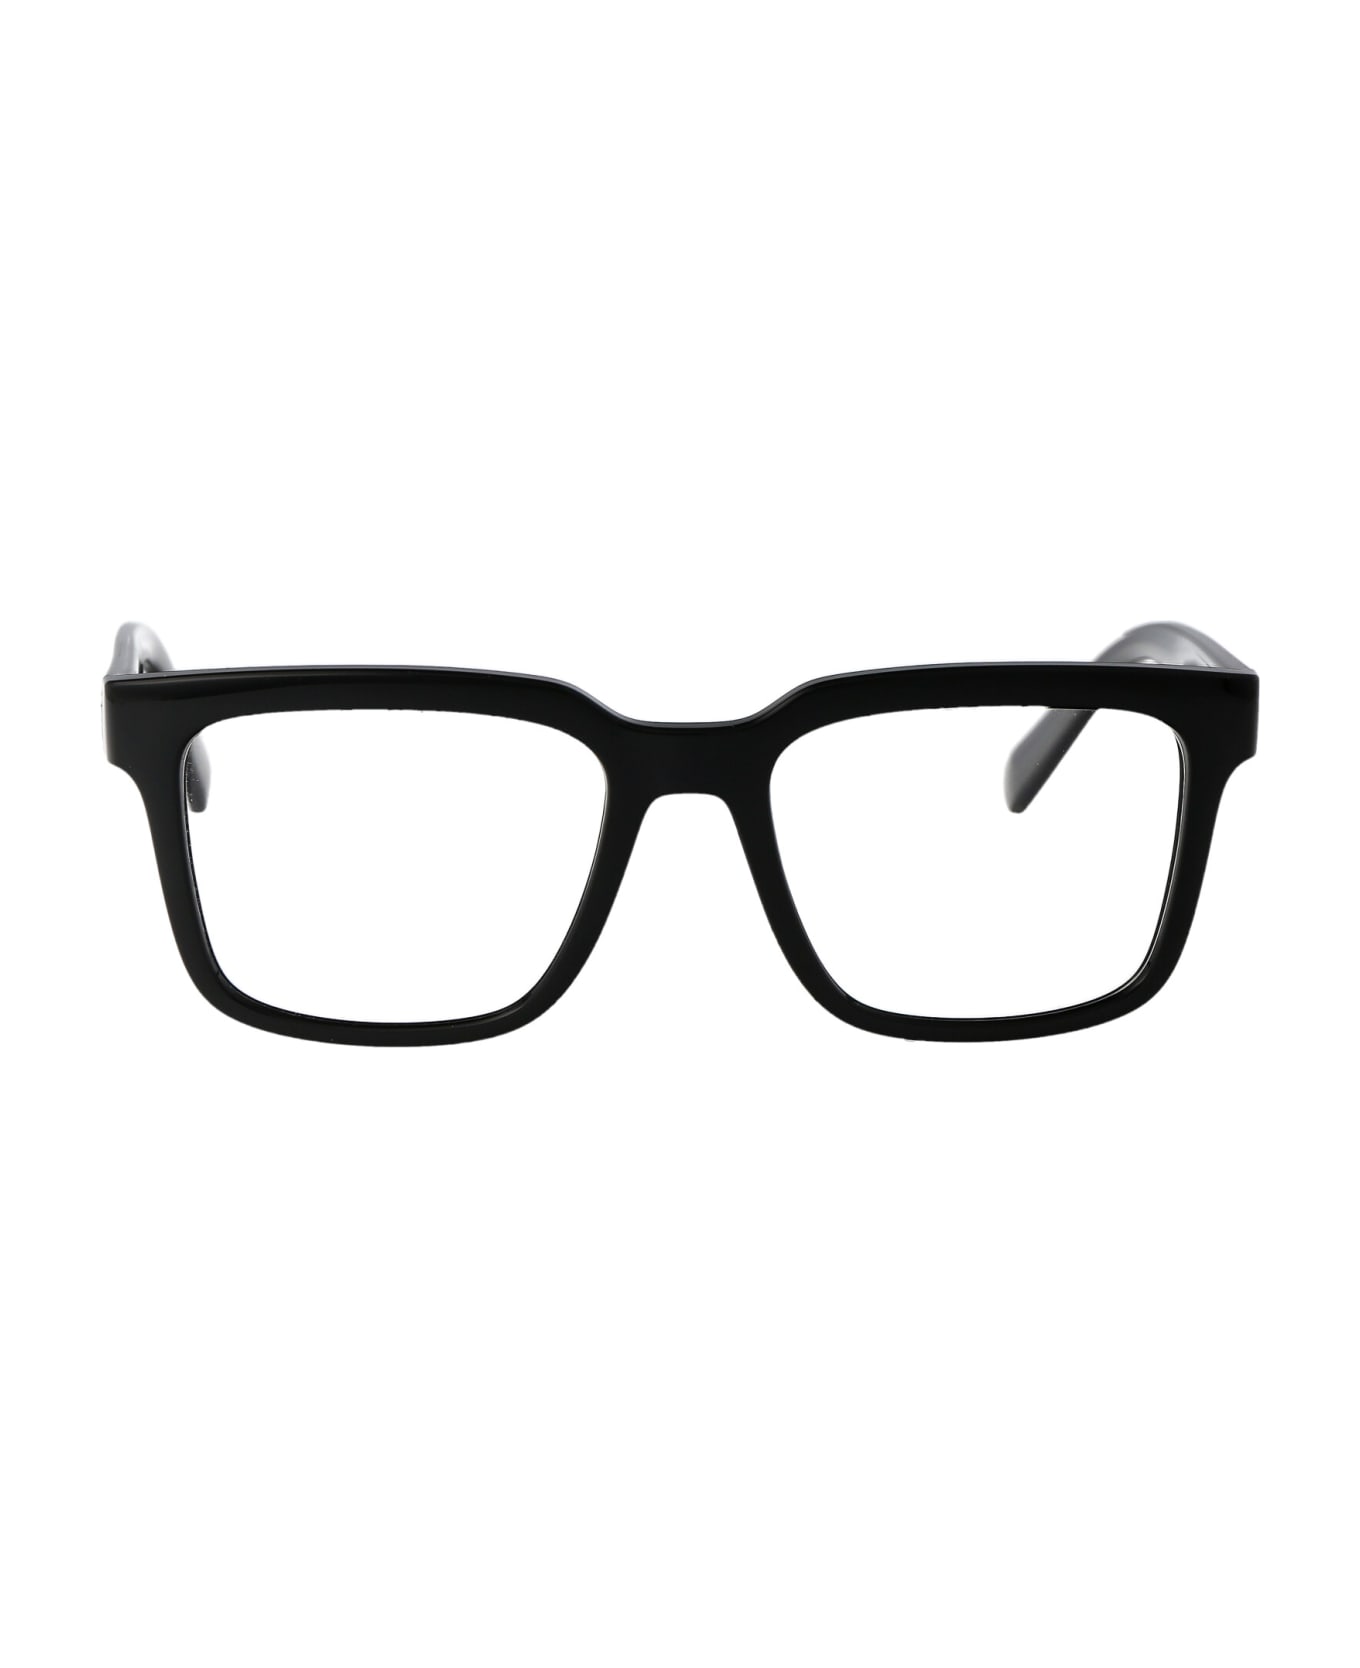 Dolce & Gabbana Eyewear 0dg5101 Glasses - 501 BLACK